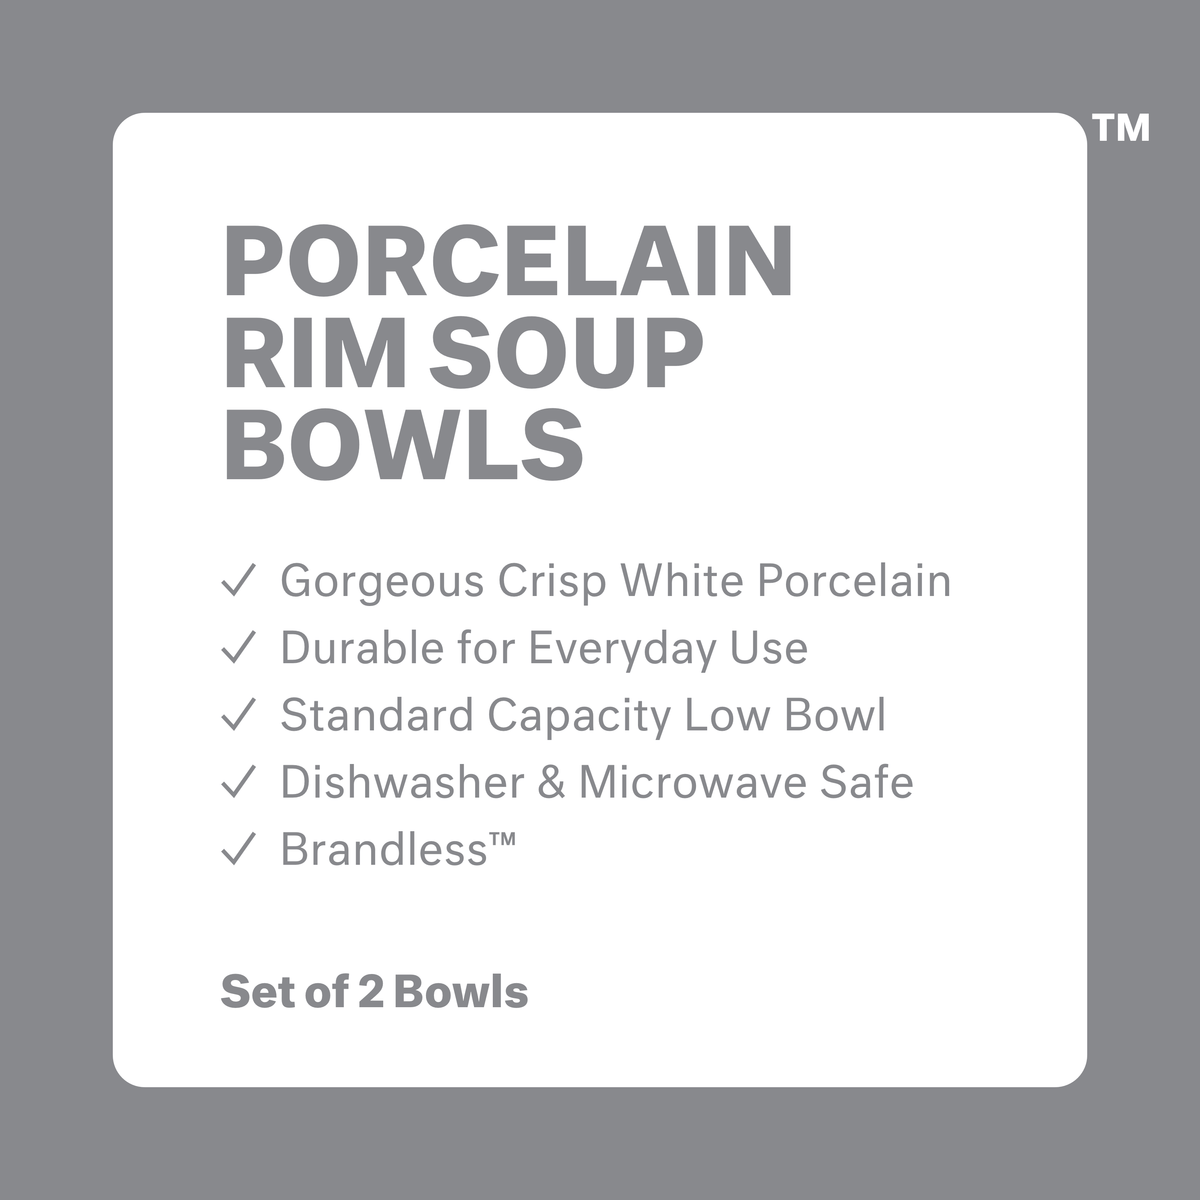 Porcelain Rim Soup Bowls: gorgeous crisp white porcelain, durable for everyday use, standard capacity low bowl, dishwasher and microwave safe, Brandless. Set of 2 bowls.